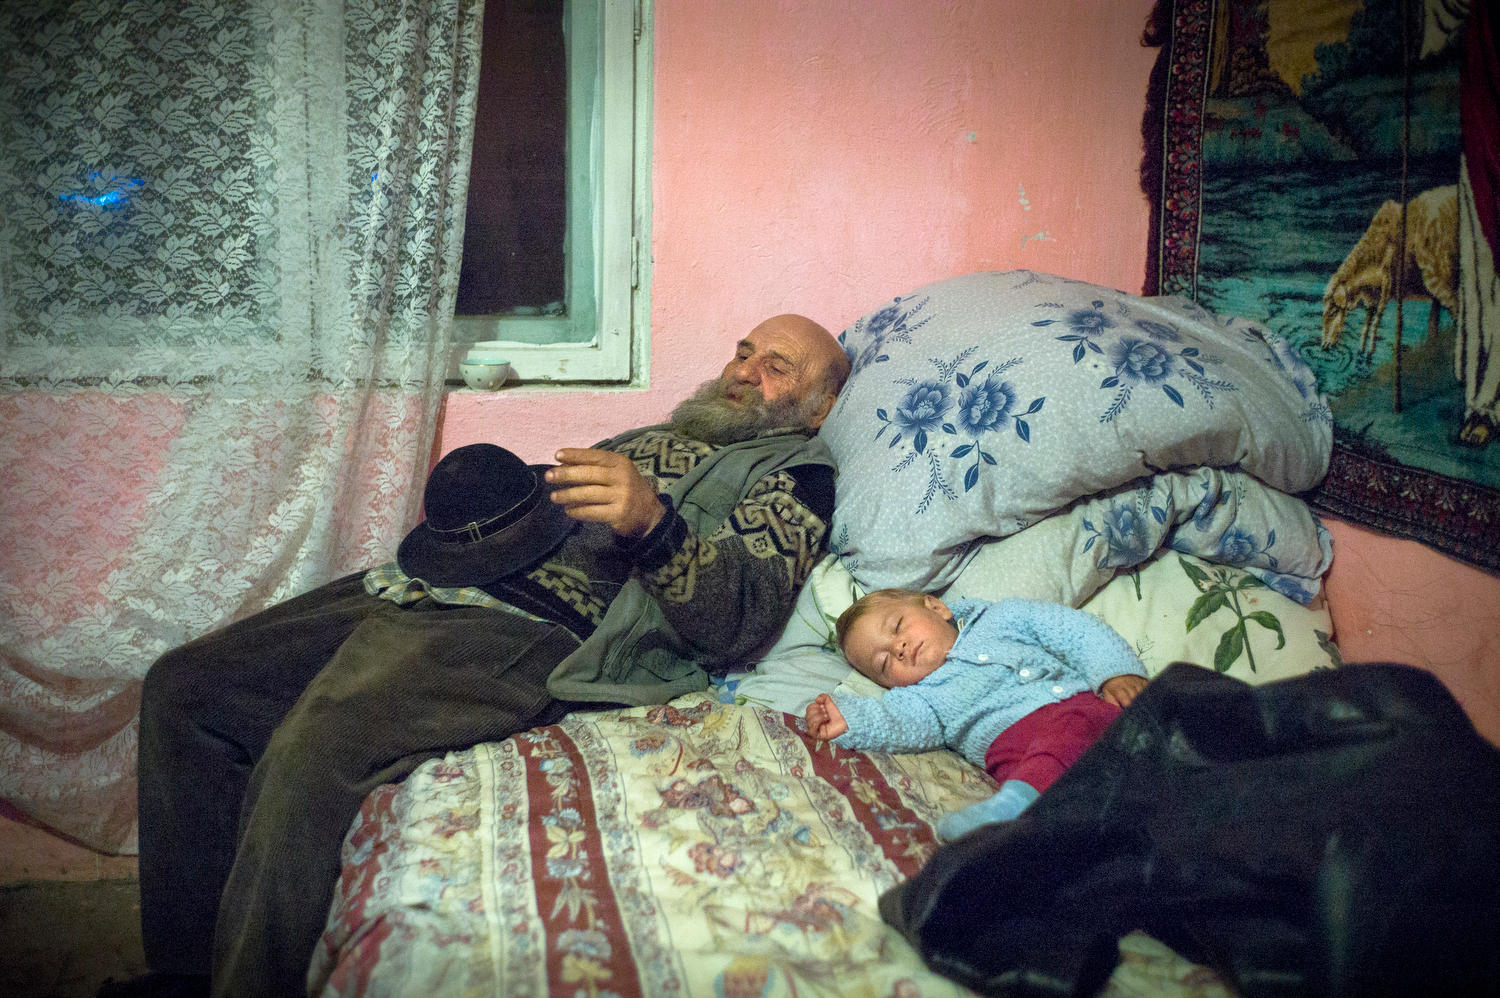 Man sleeping next to a child